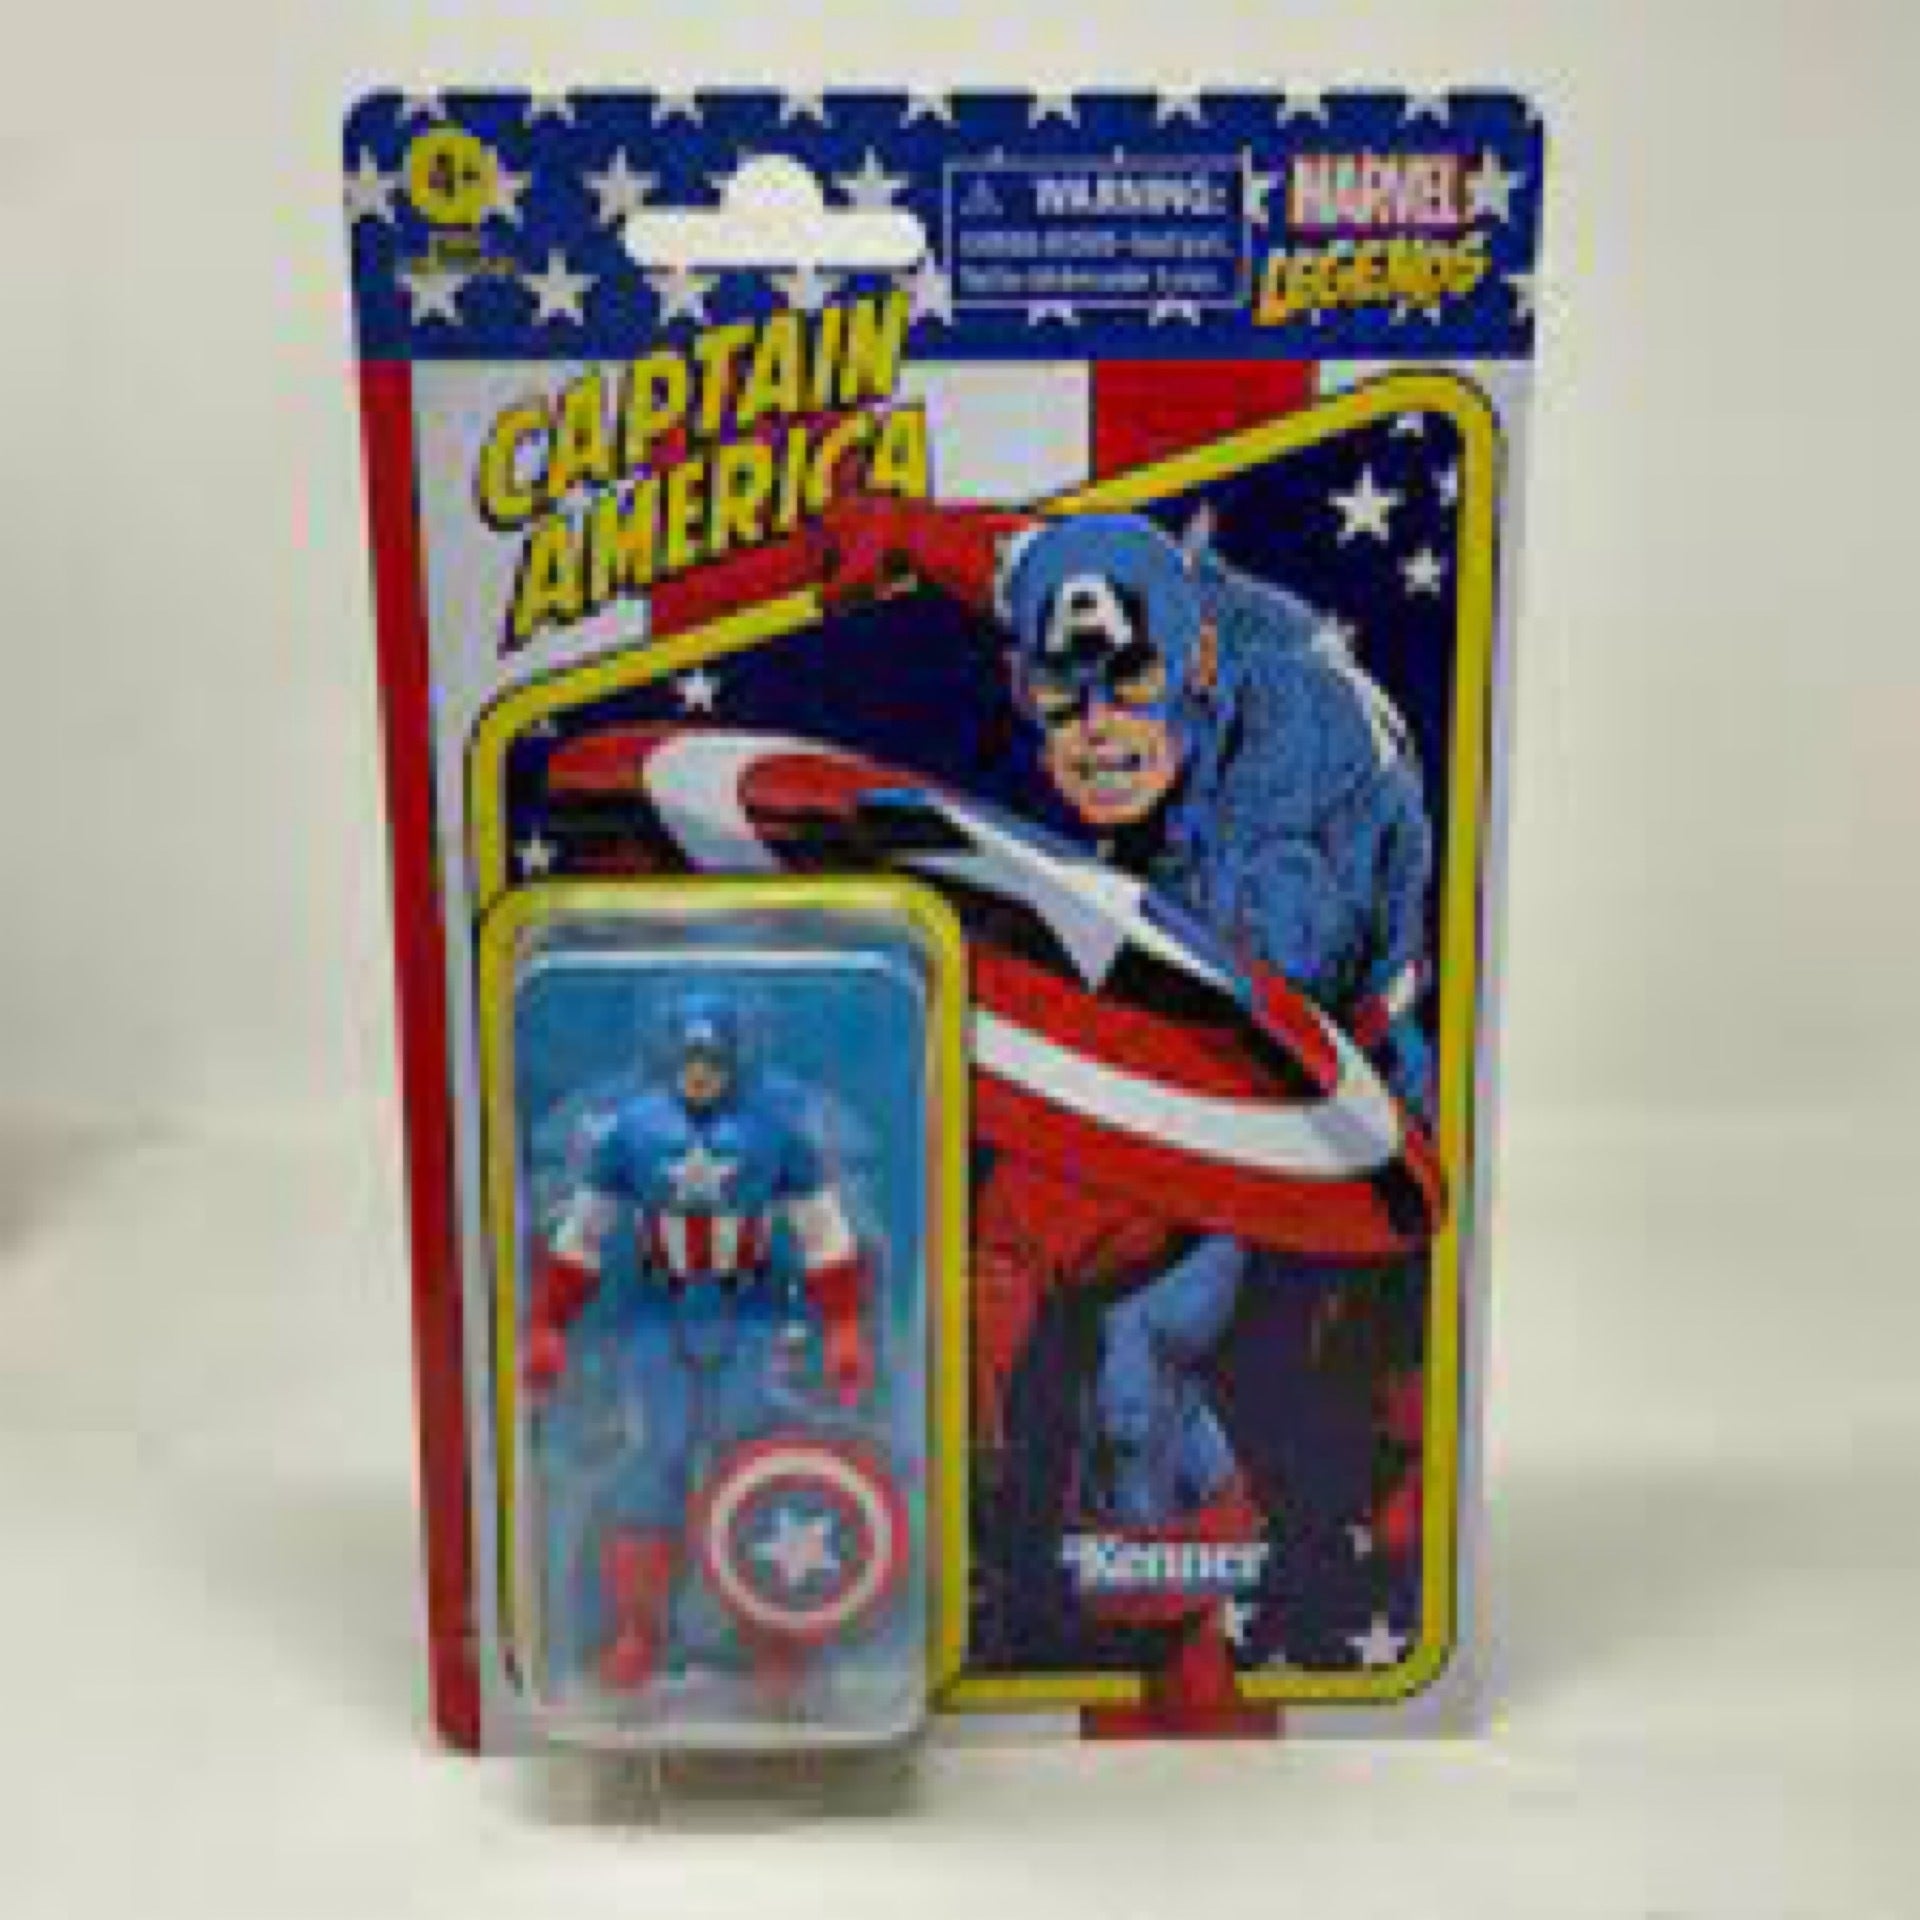 MARVEL LEGENDS Figurine Captain America Kenner Retro Series Hasbro